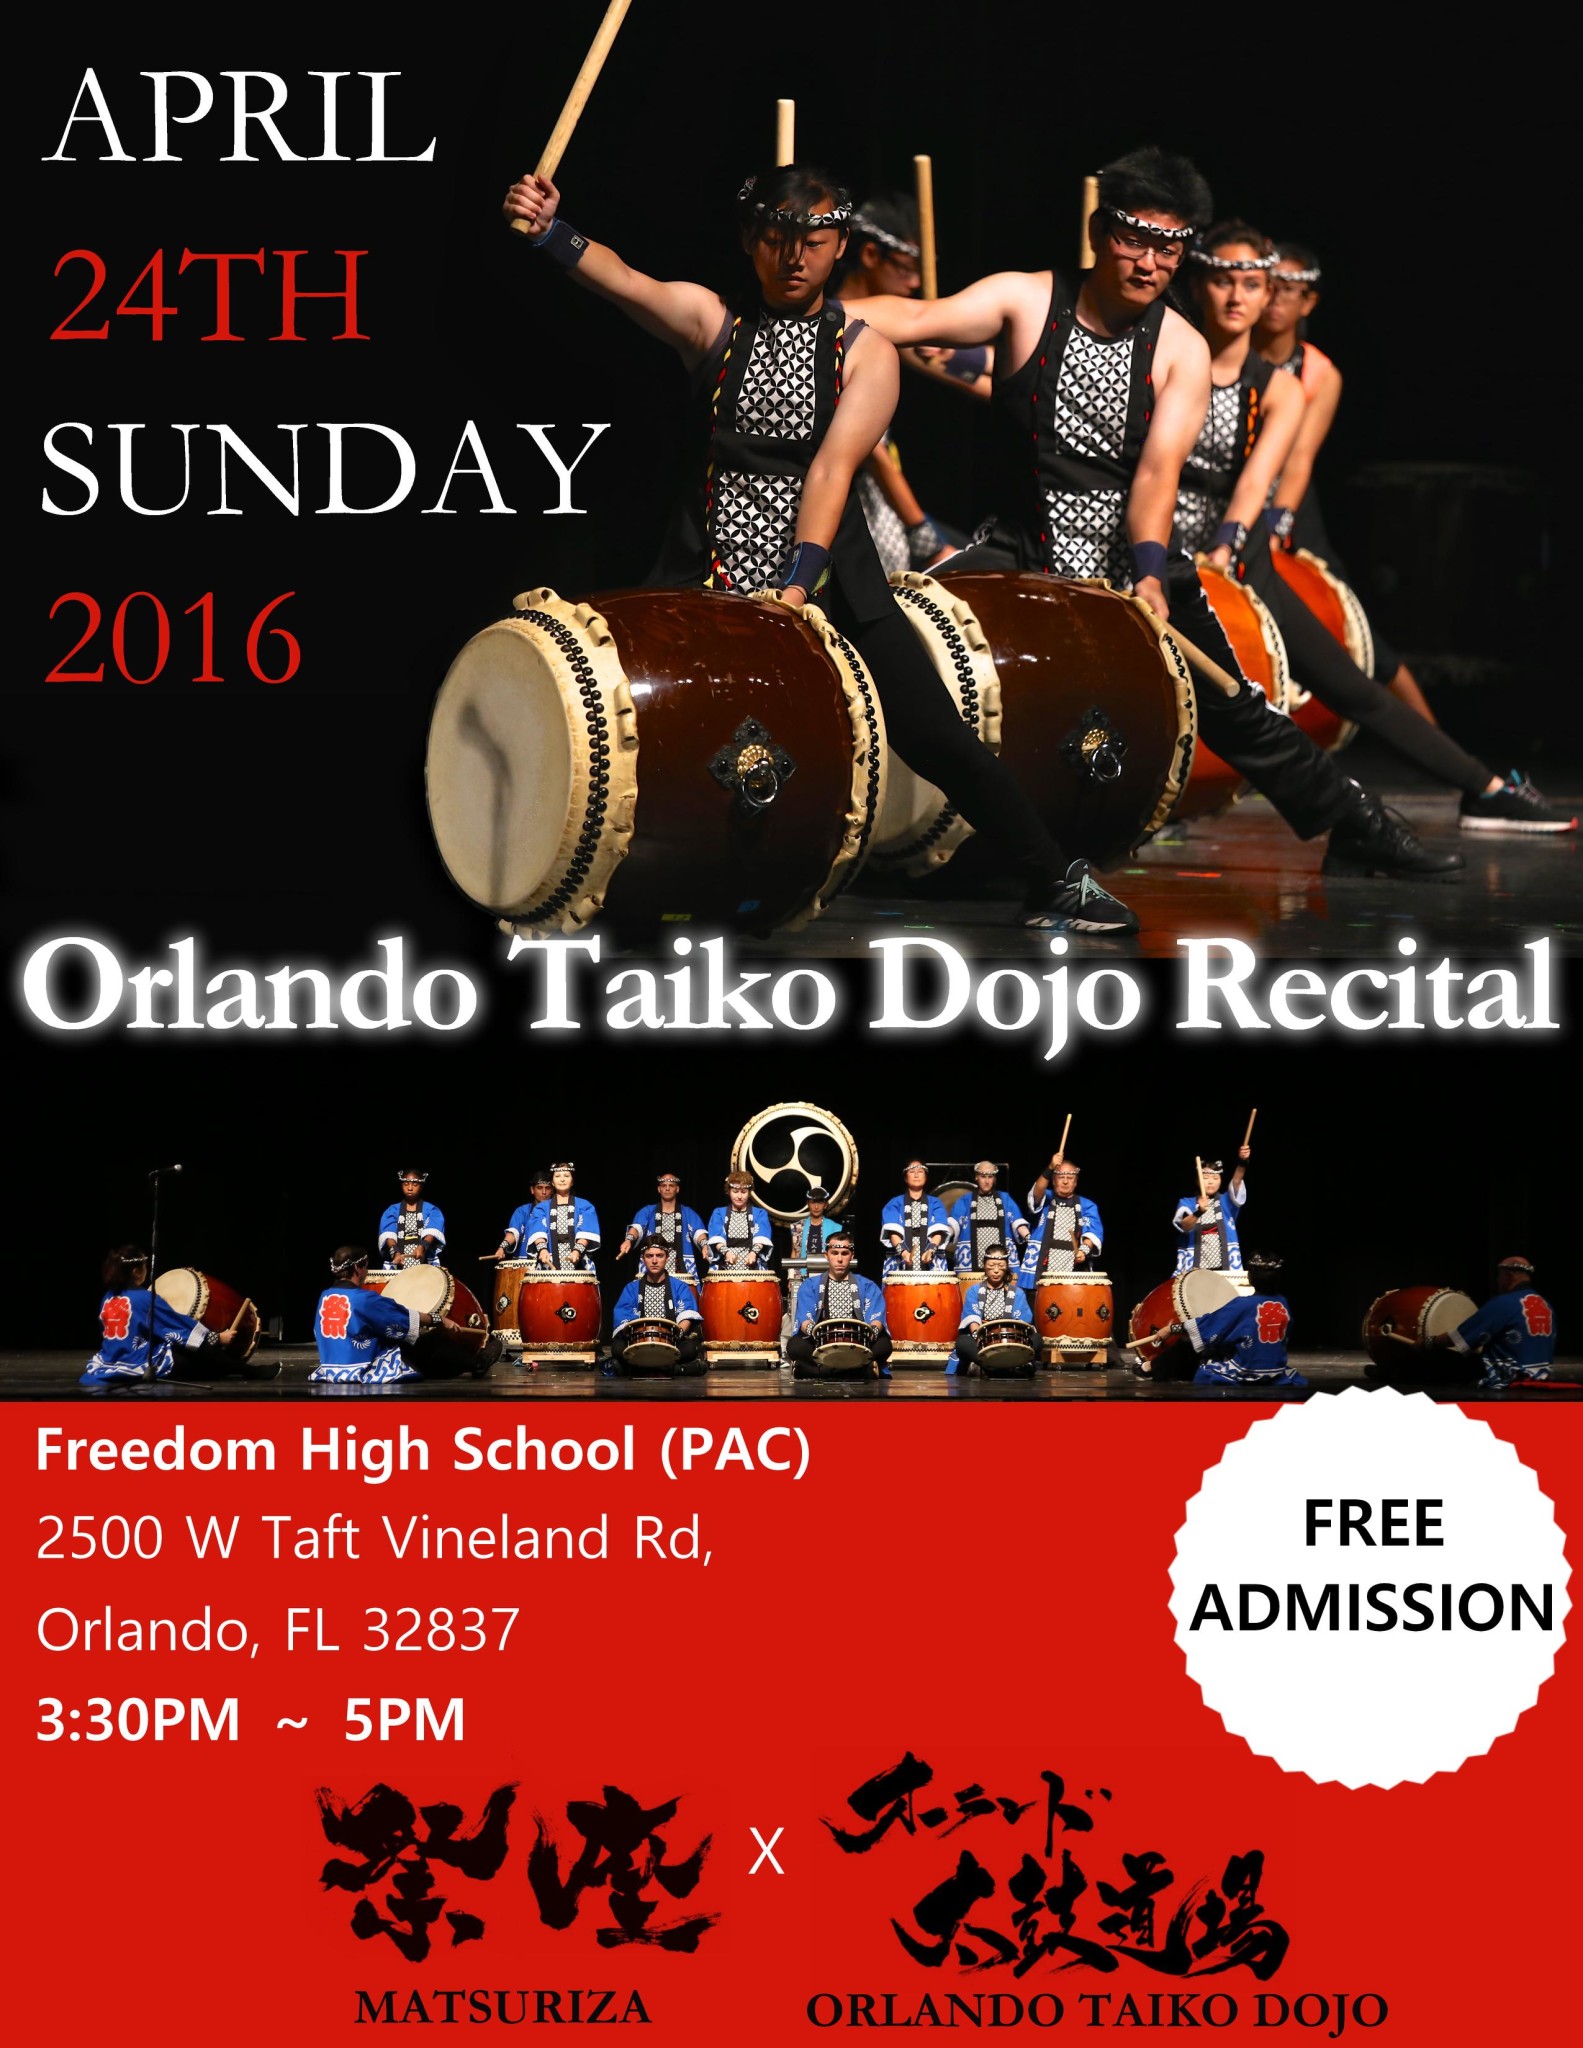 APR 24 Orlando Taiko Dojo Recital